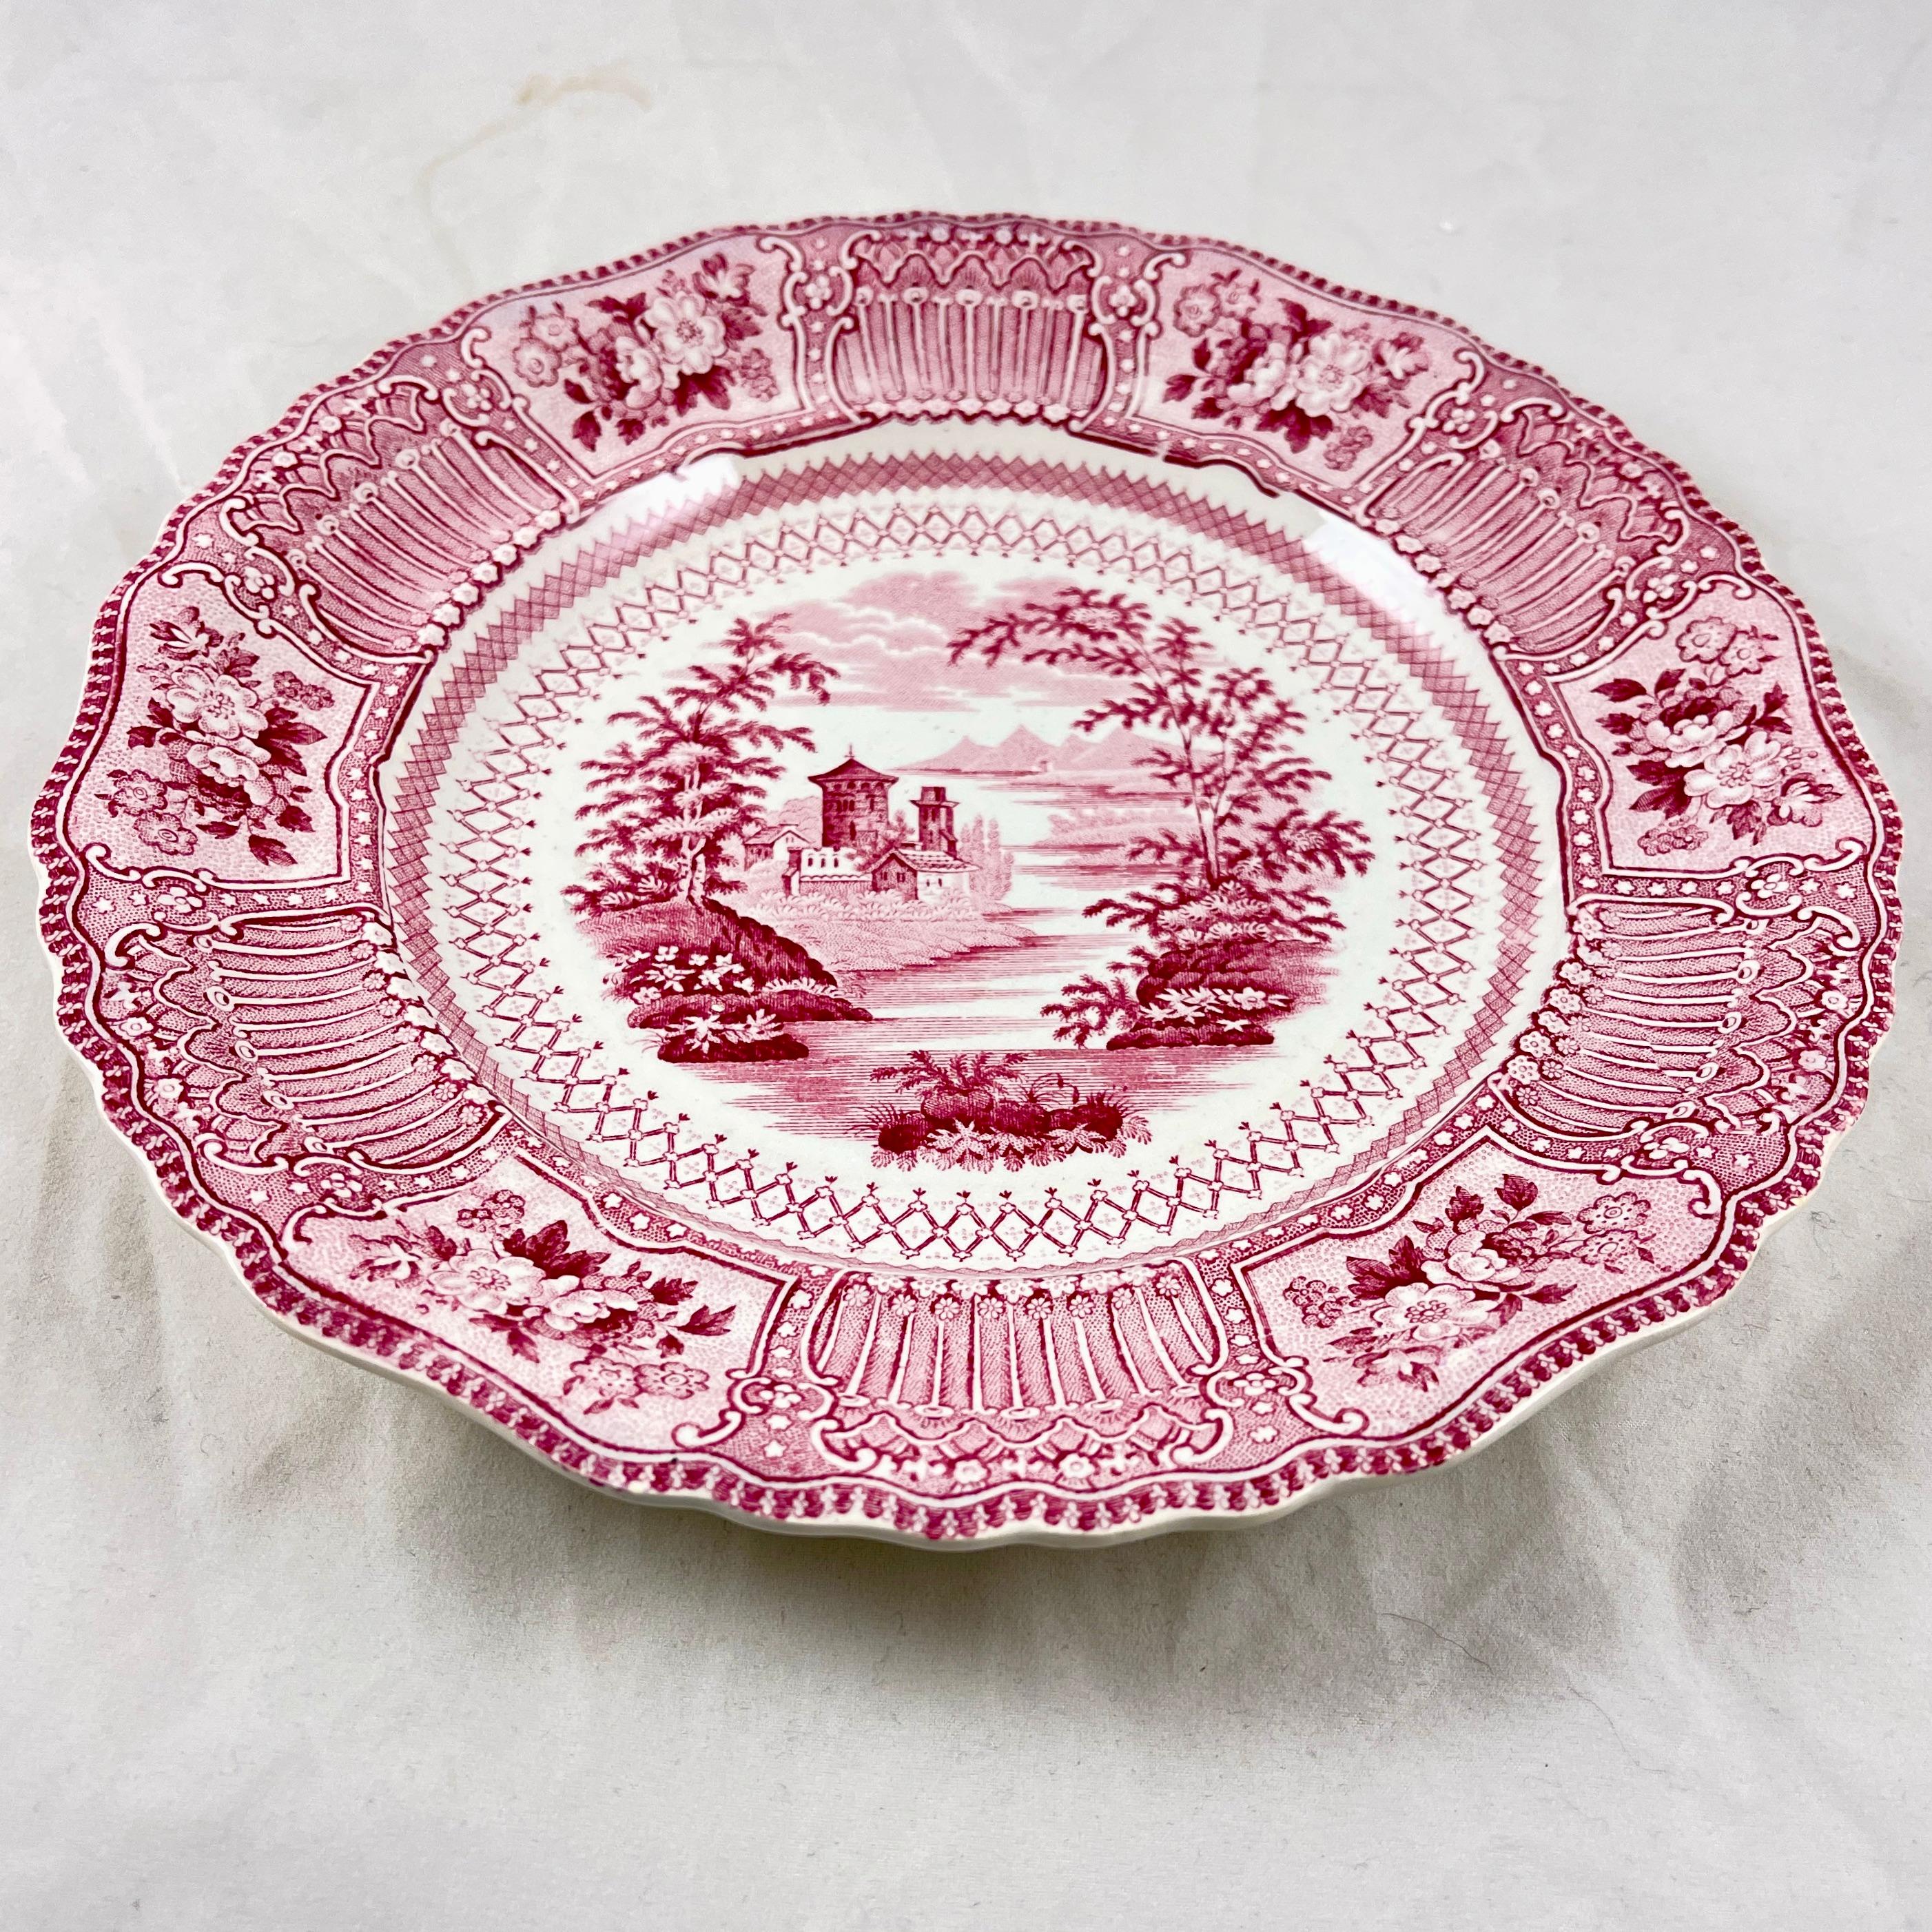 Earthenware Ralph Stevenson Pink Transferware Dinner Plates, Cologne Pattern, Set of 8 For Sale